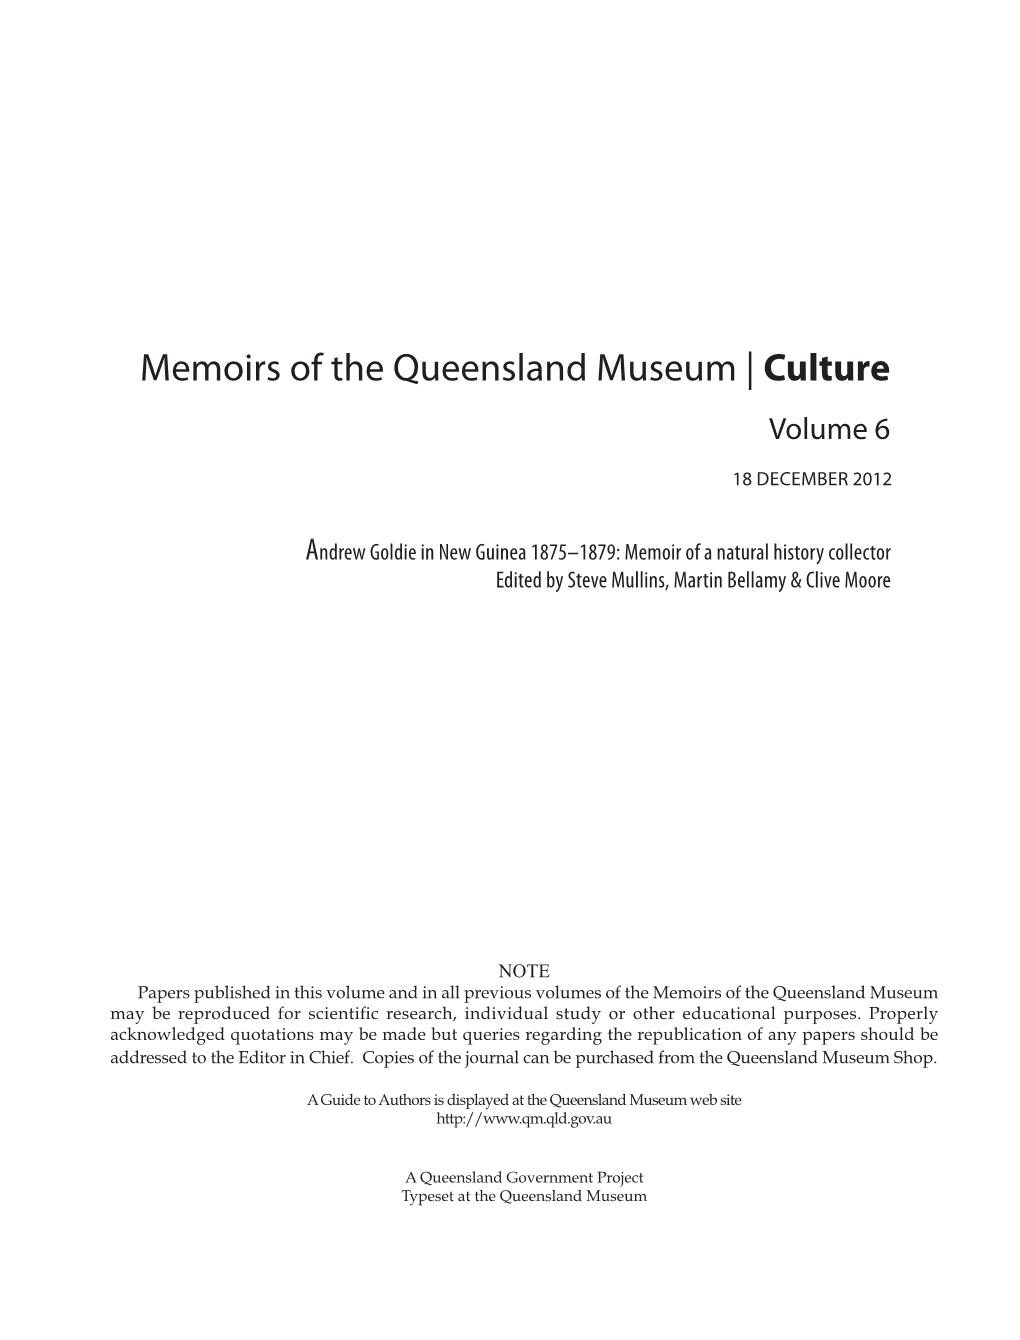 Memoirs of the Queensland Museum | Culture Volume 6